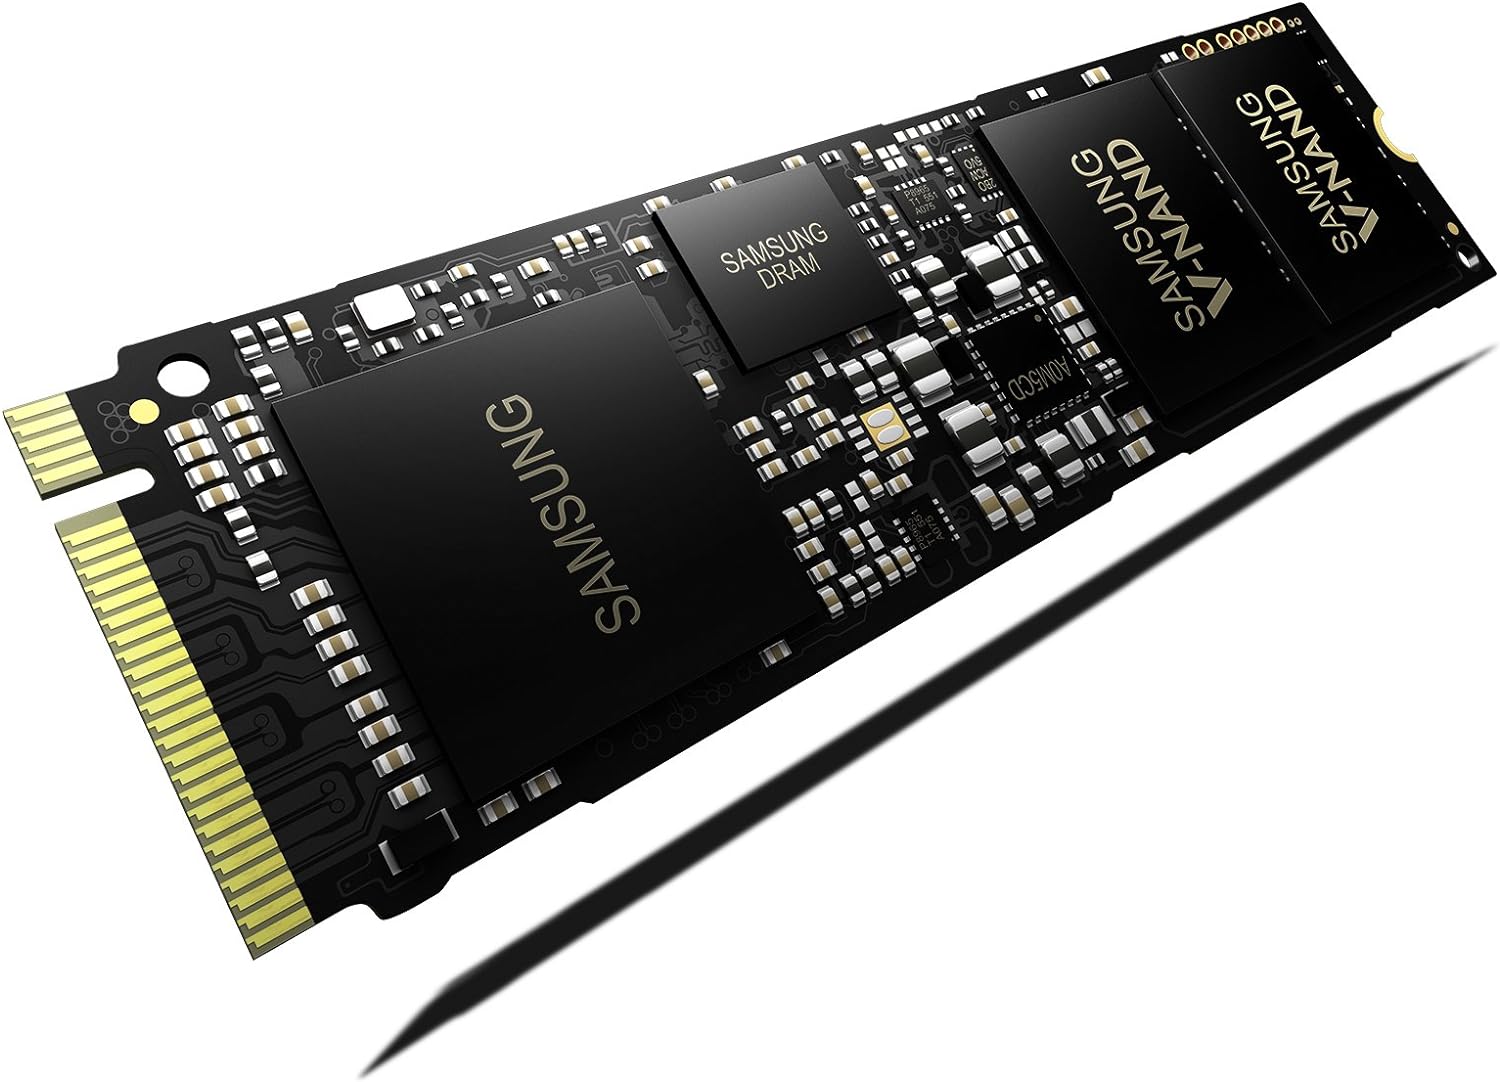 Samsung 950 PRO 512GB PCIe NVMe M.2 Internal SSD, MZ-V5P512BW - $110